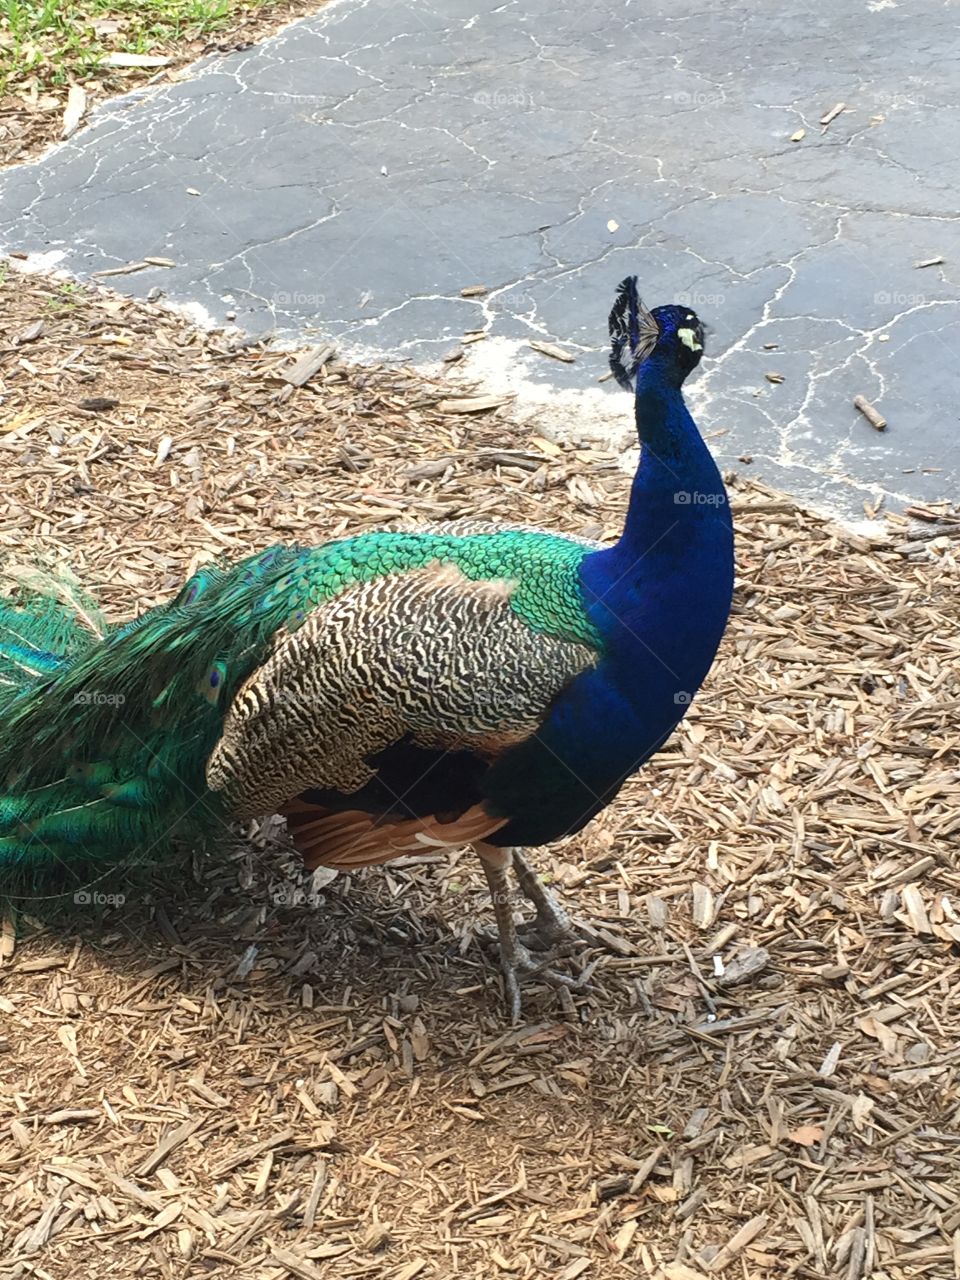 Peacock. Looking around peacock